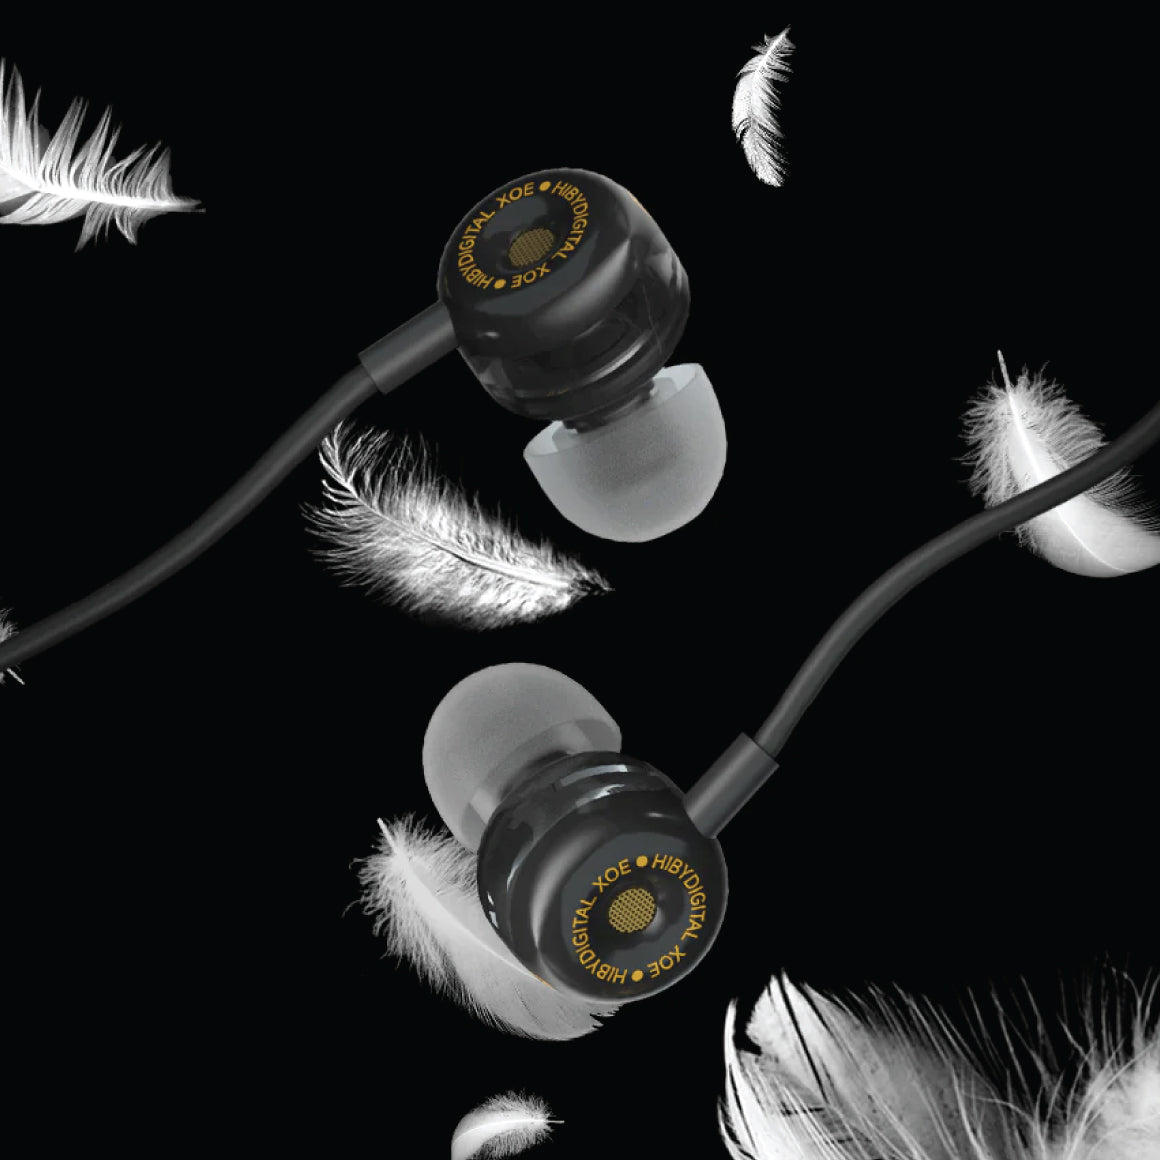 Headphone-Zone-HiBy-Digital-XOE-black-3.5mm